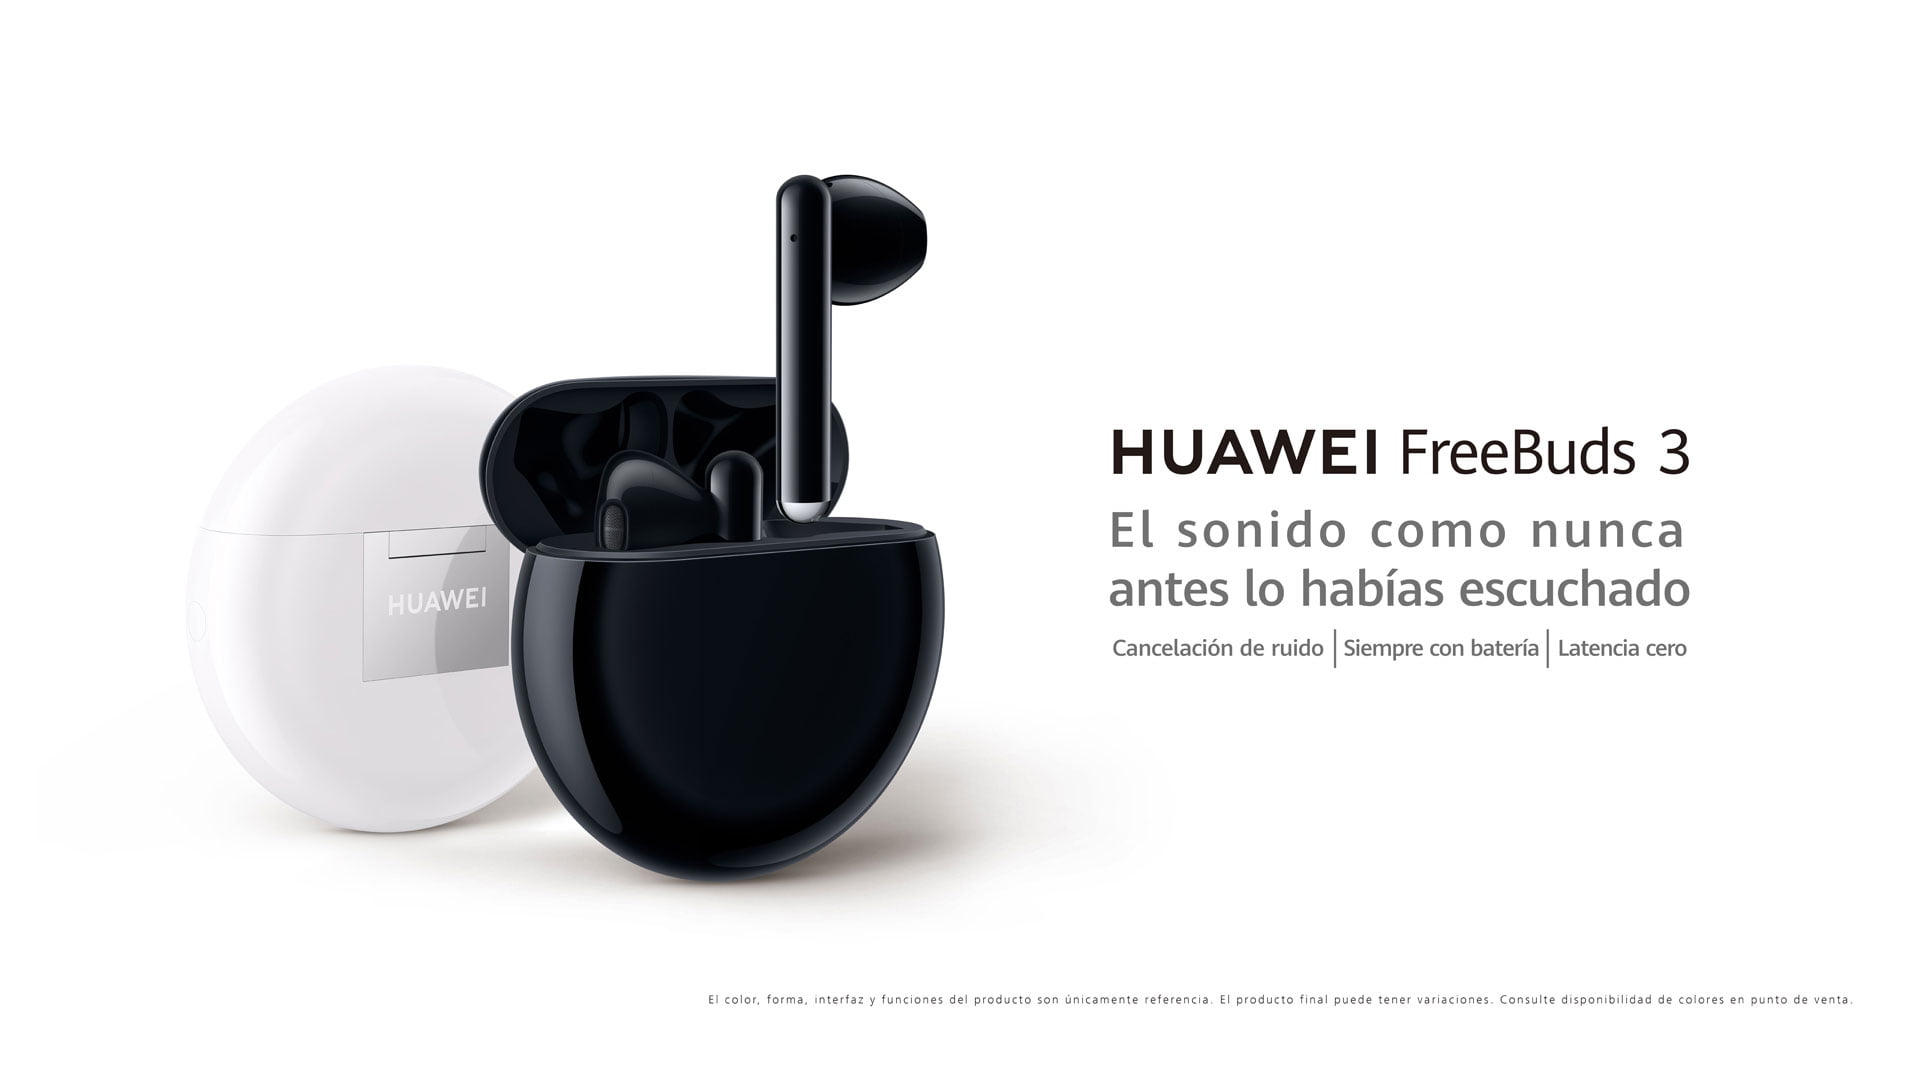 Huawei FreeBuds 3